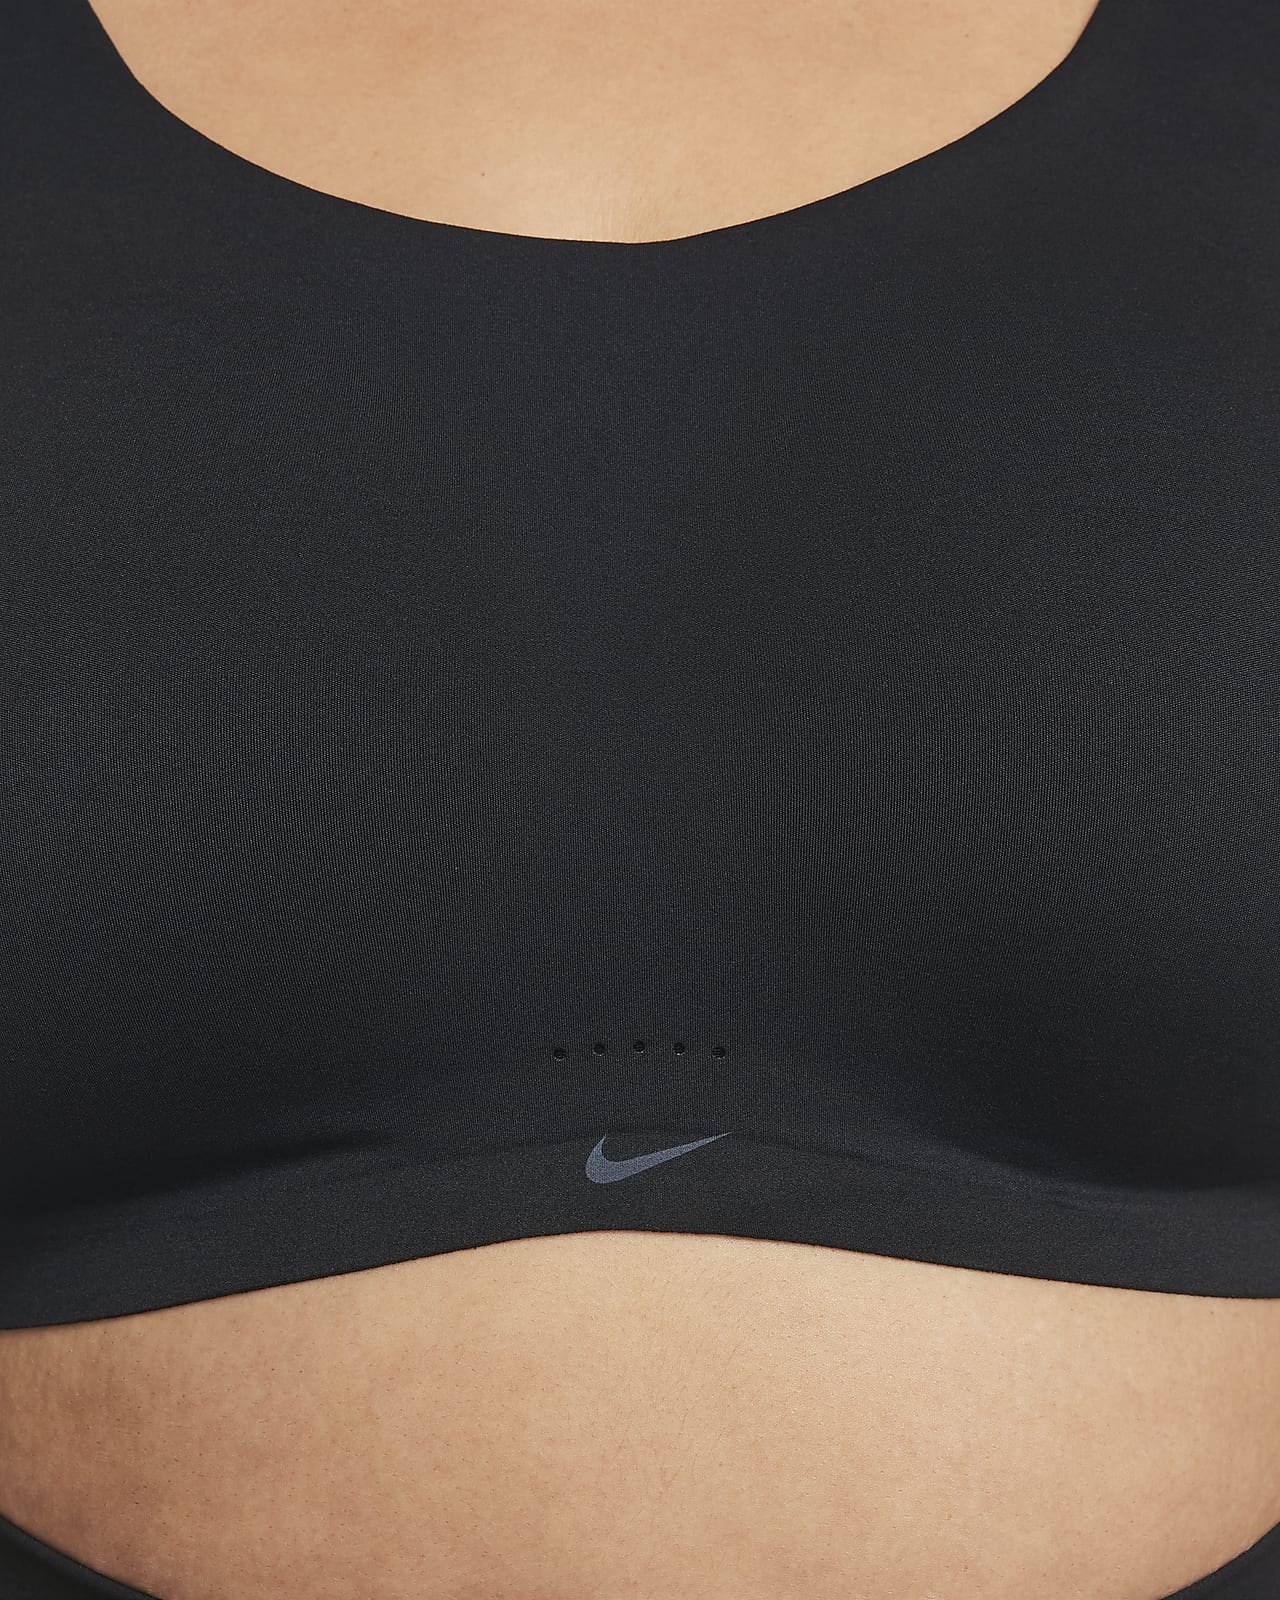 Nike Training Dri-Fit Favorites light support sports bra in black